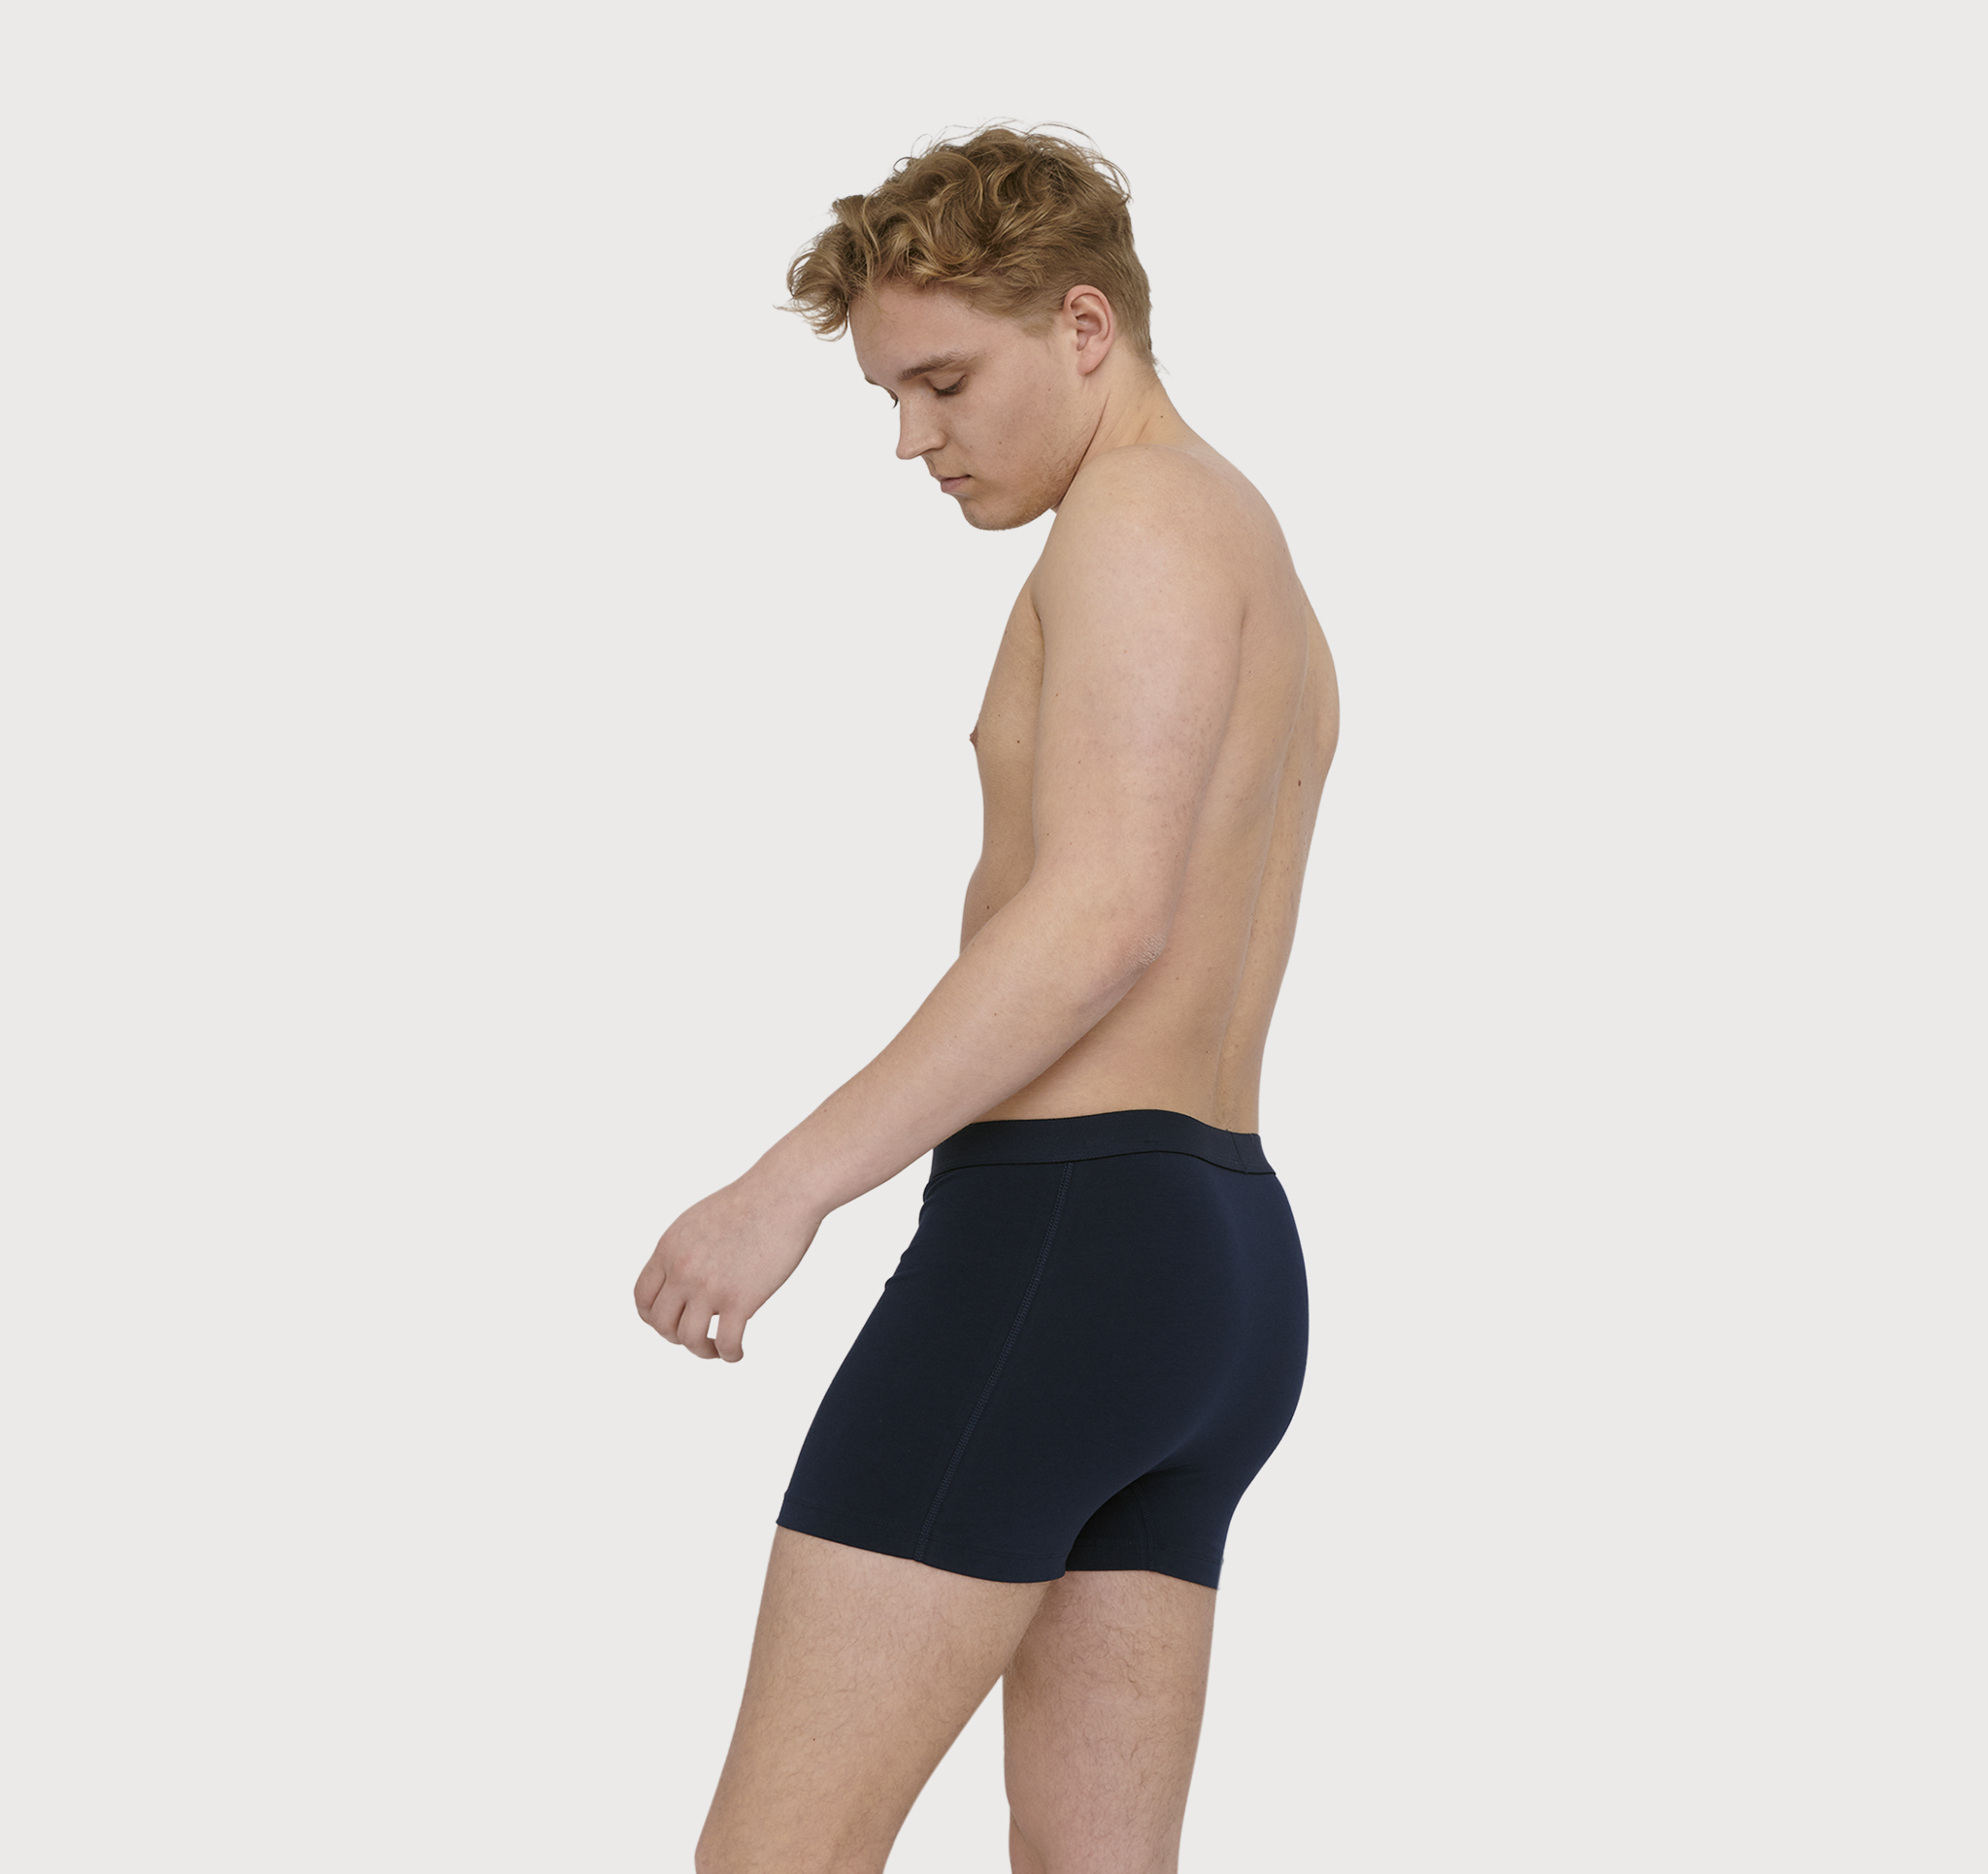 Pack of 2 McGREGOR boxer shorts sustainable men's cotton underwear  8720618177995 black